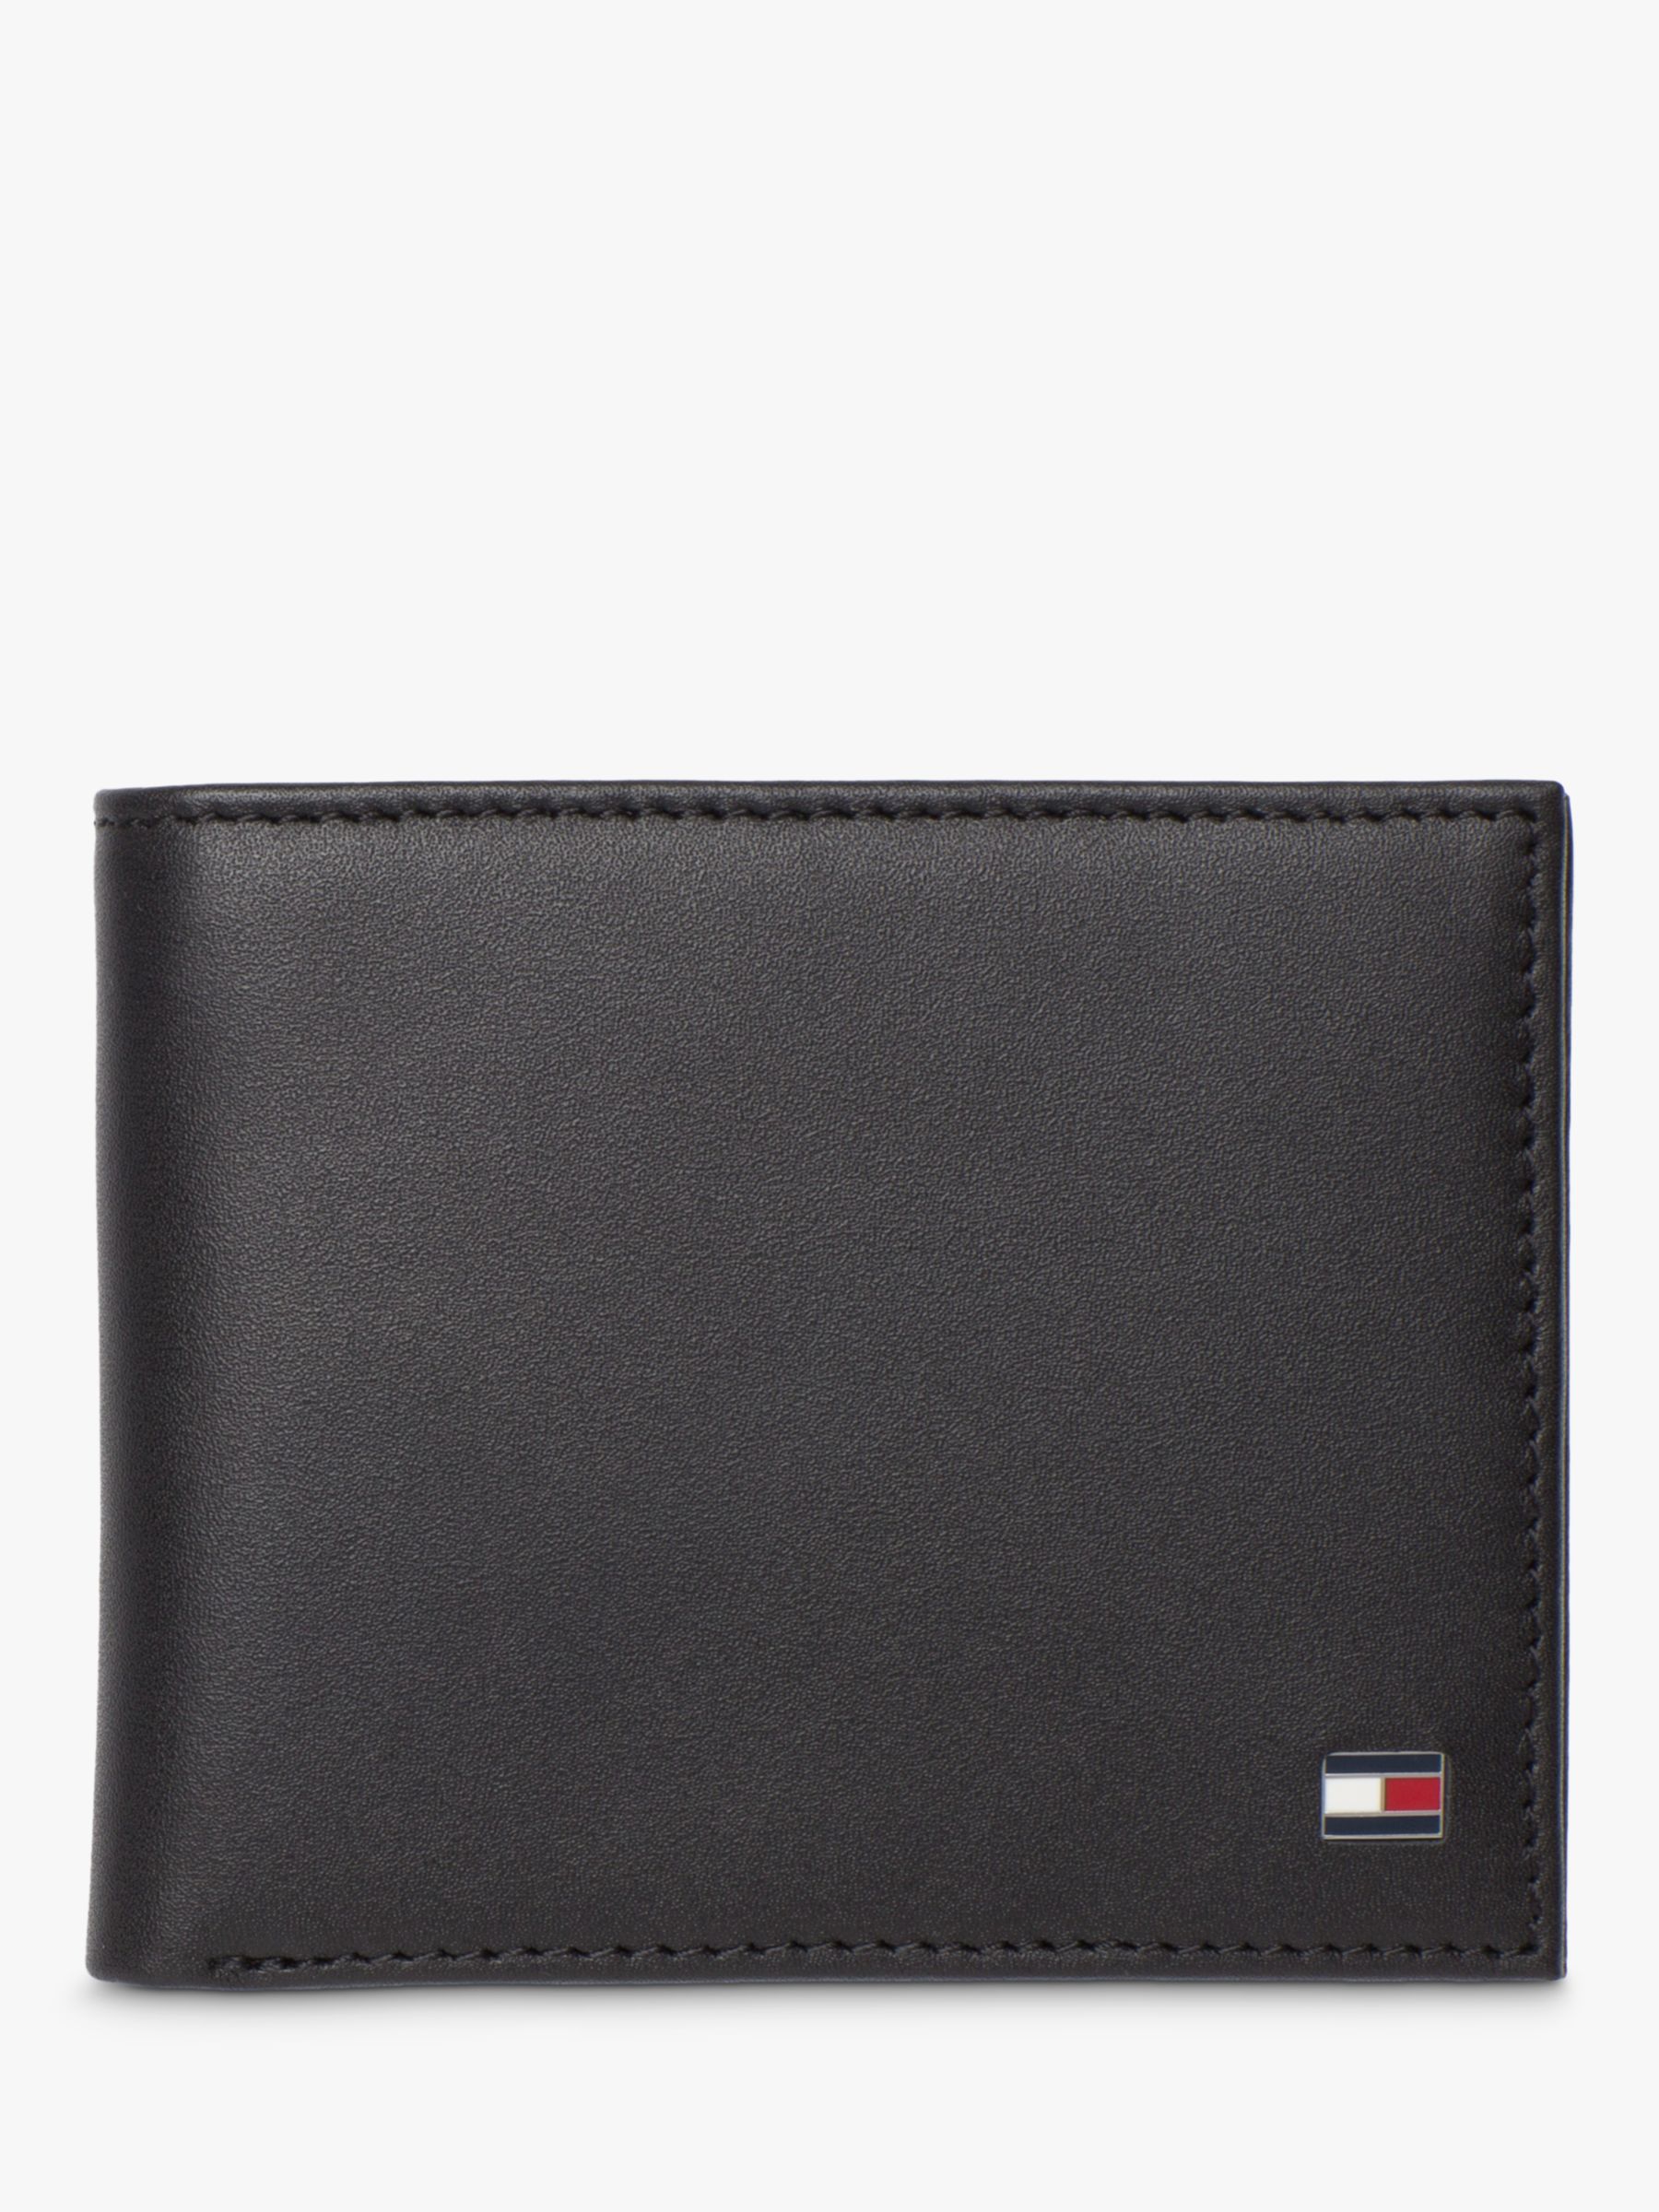 Tommy Hilfiger Eton Leather Mini Wallet